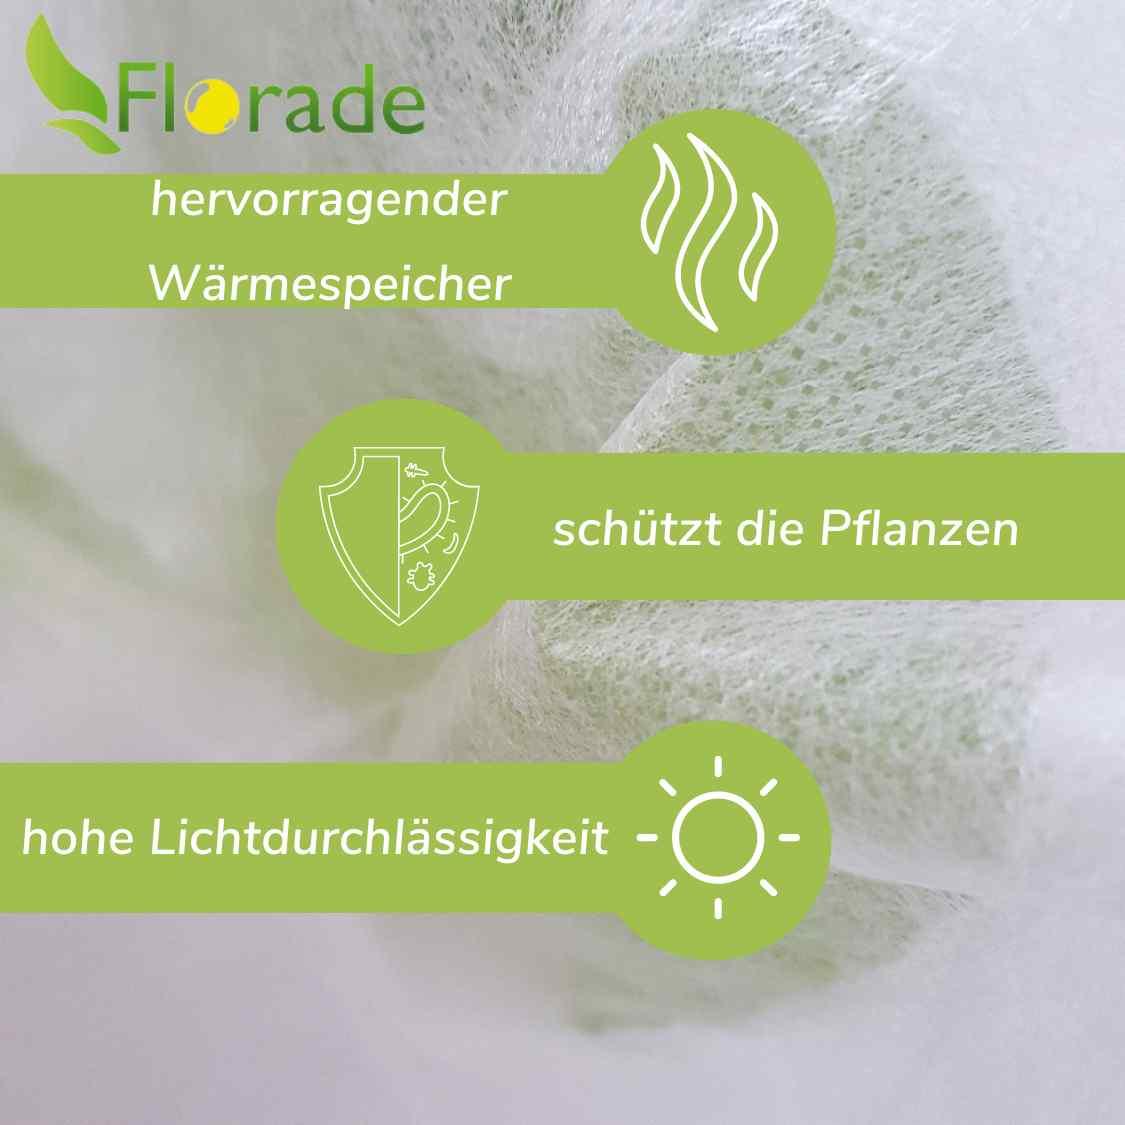 Wintervlies - Thermovlies - Winter Pflanzenschutz - Frostschutz - Florade.de 